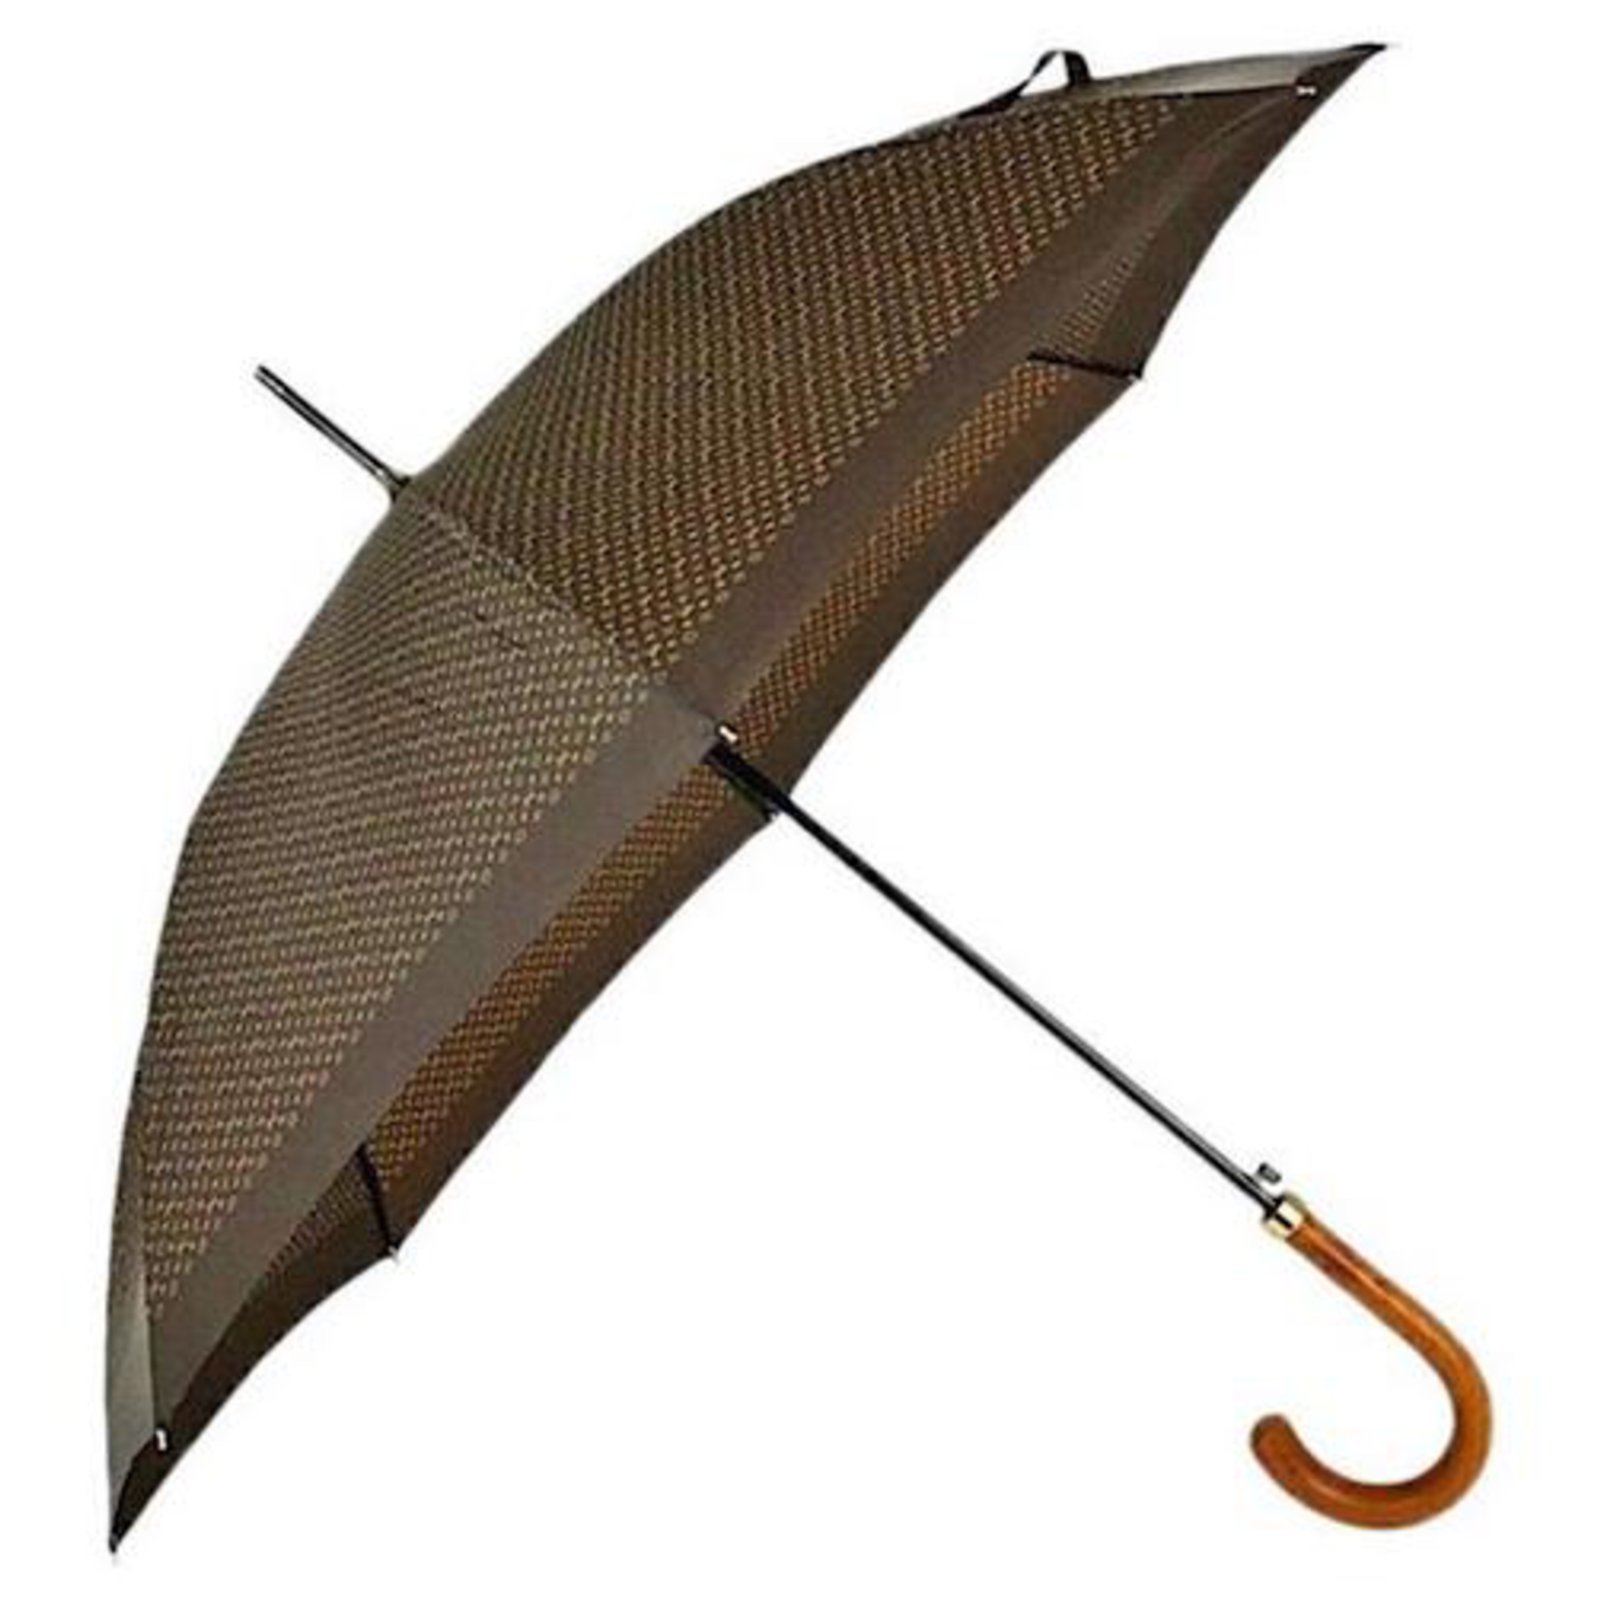 louis vuitton umbrella wooden handle